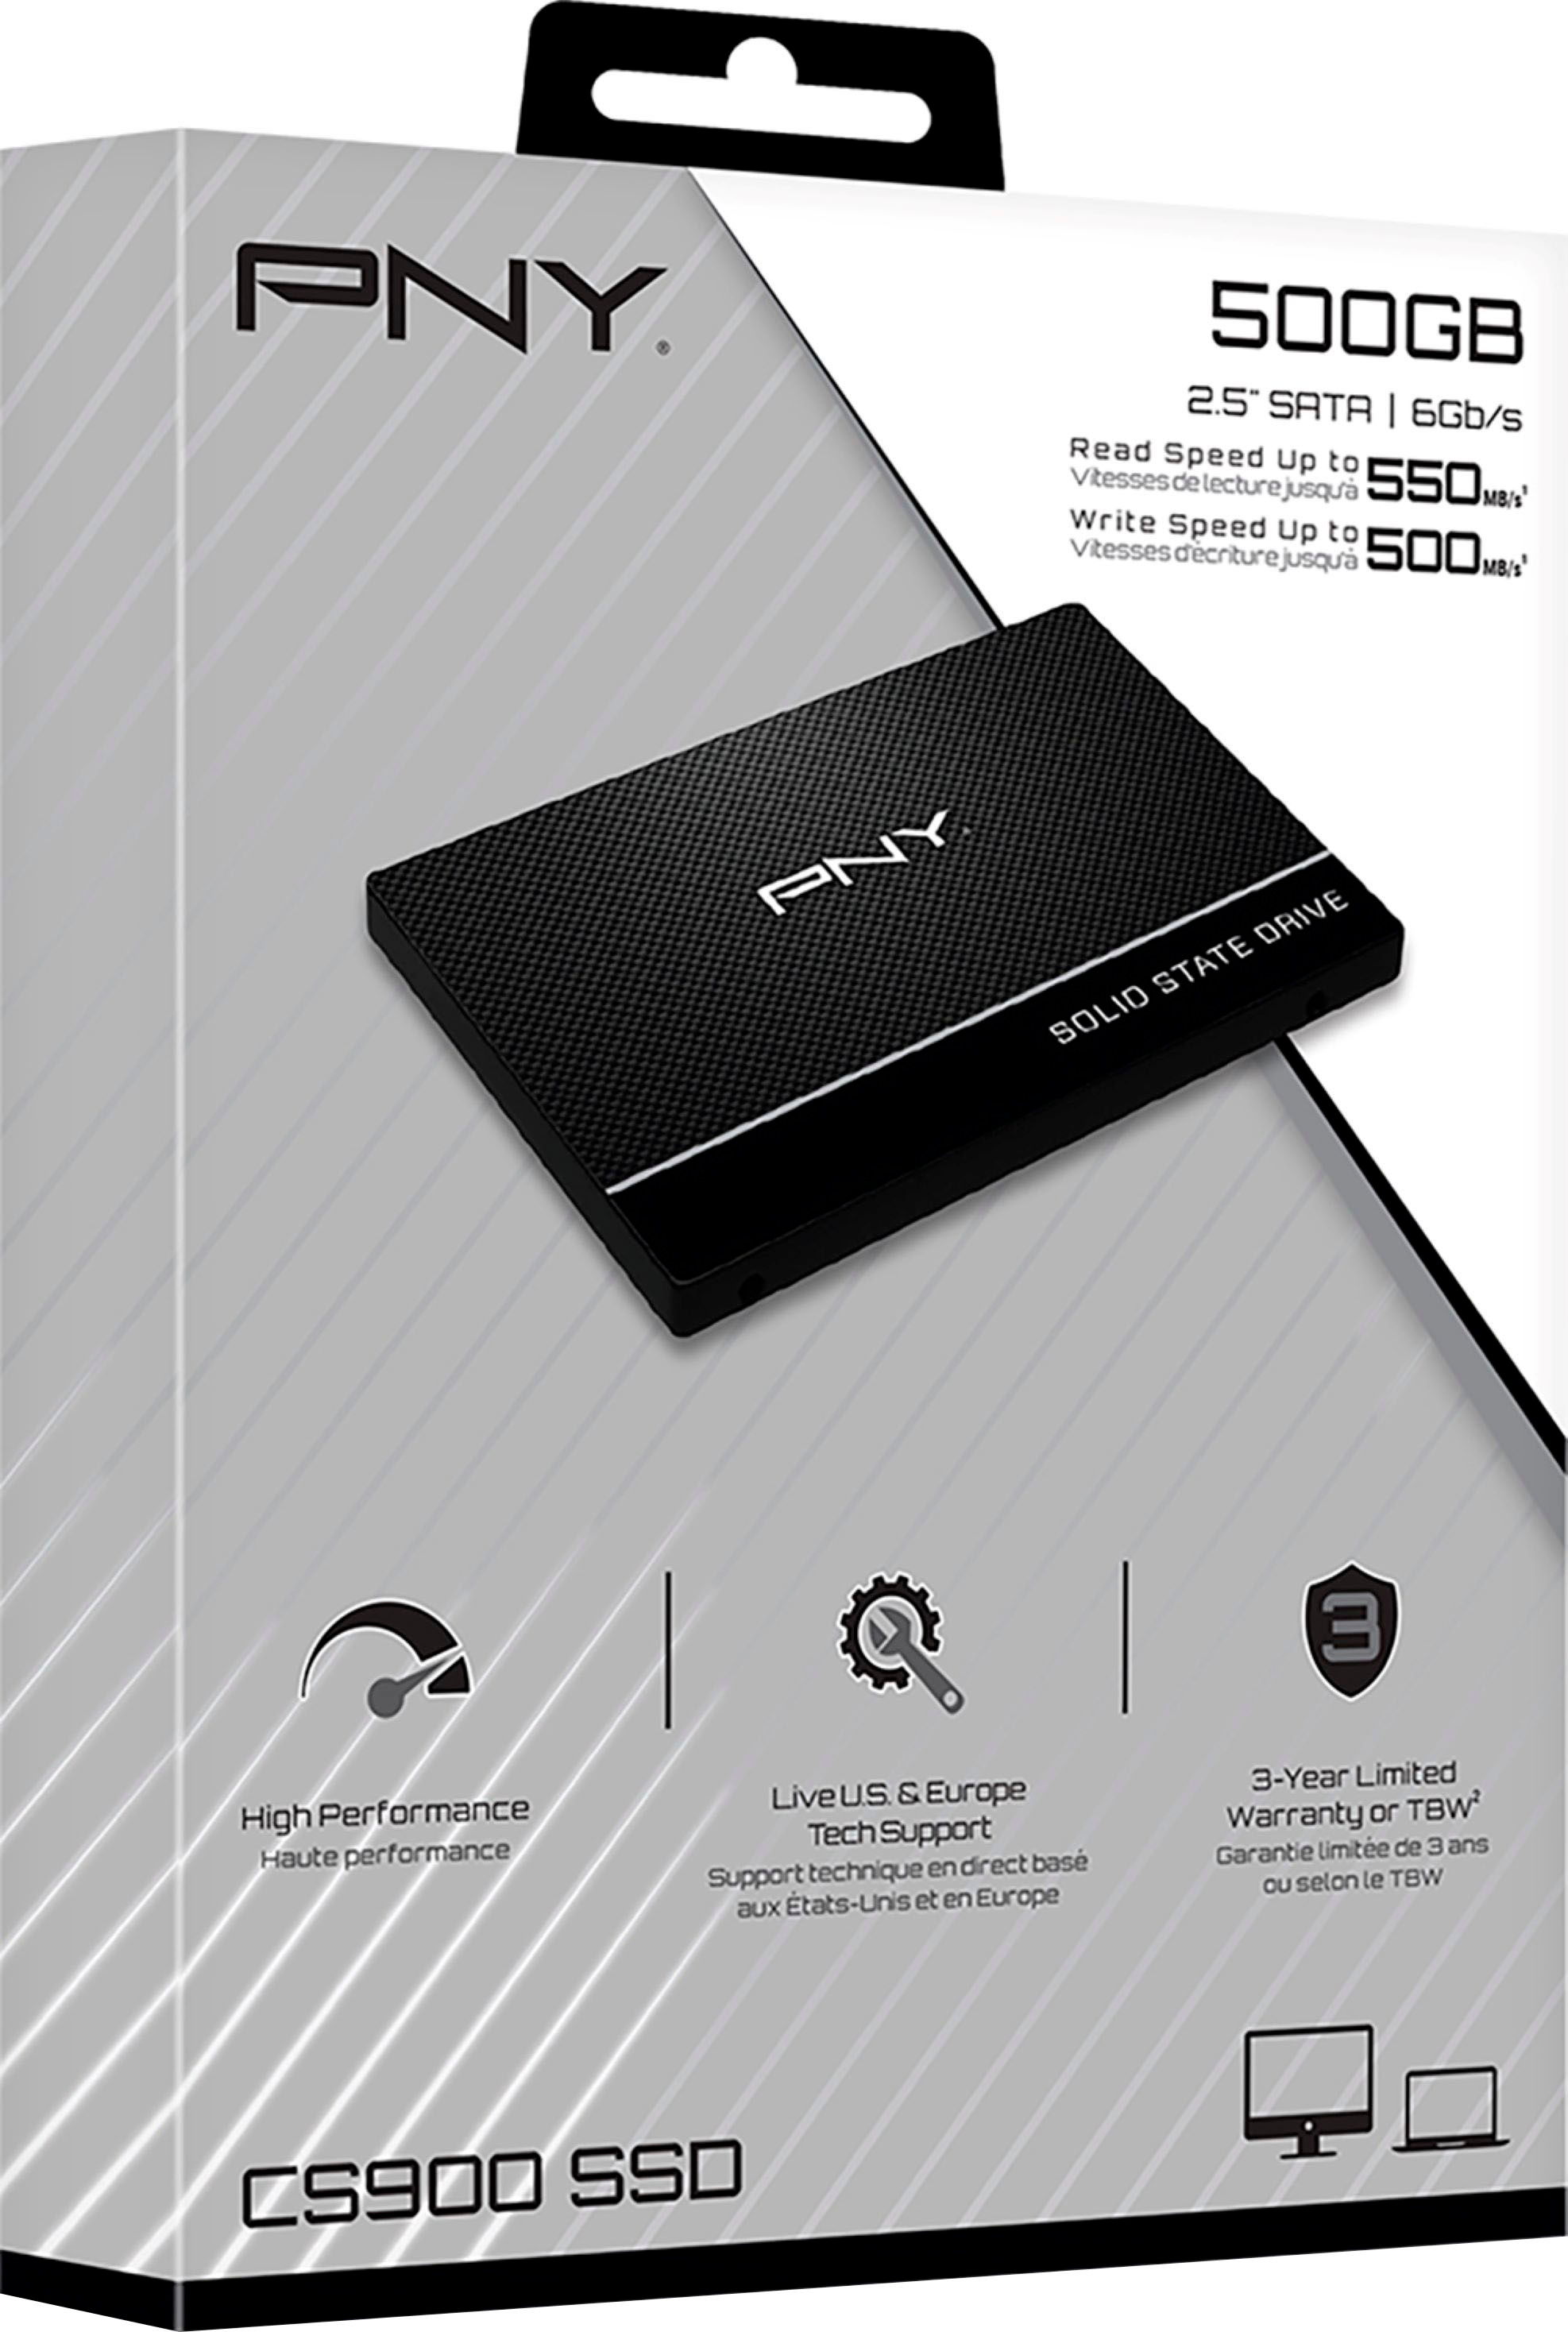 PNY 500Go SATA III SSD7CS900-500-RB SATA III - Disque SSD PNY